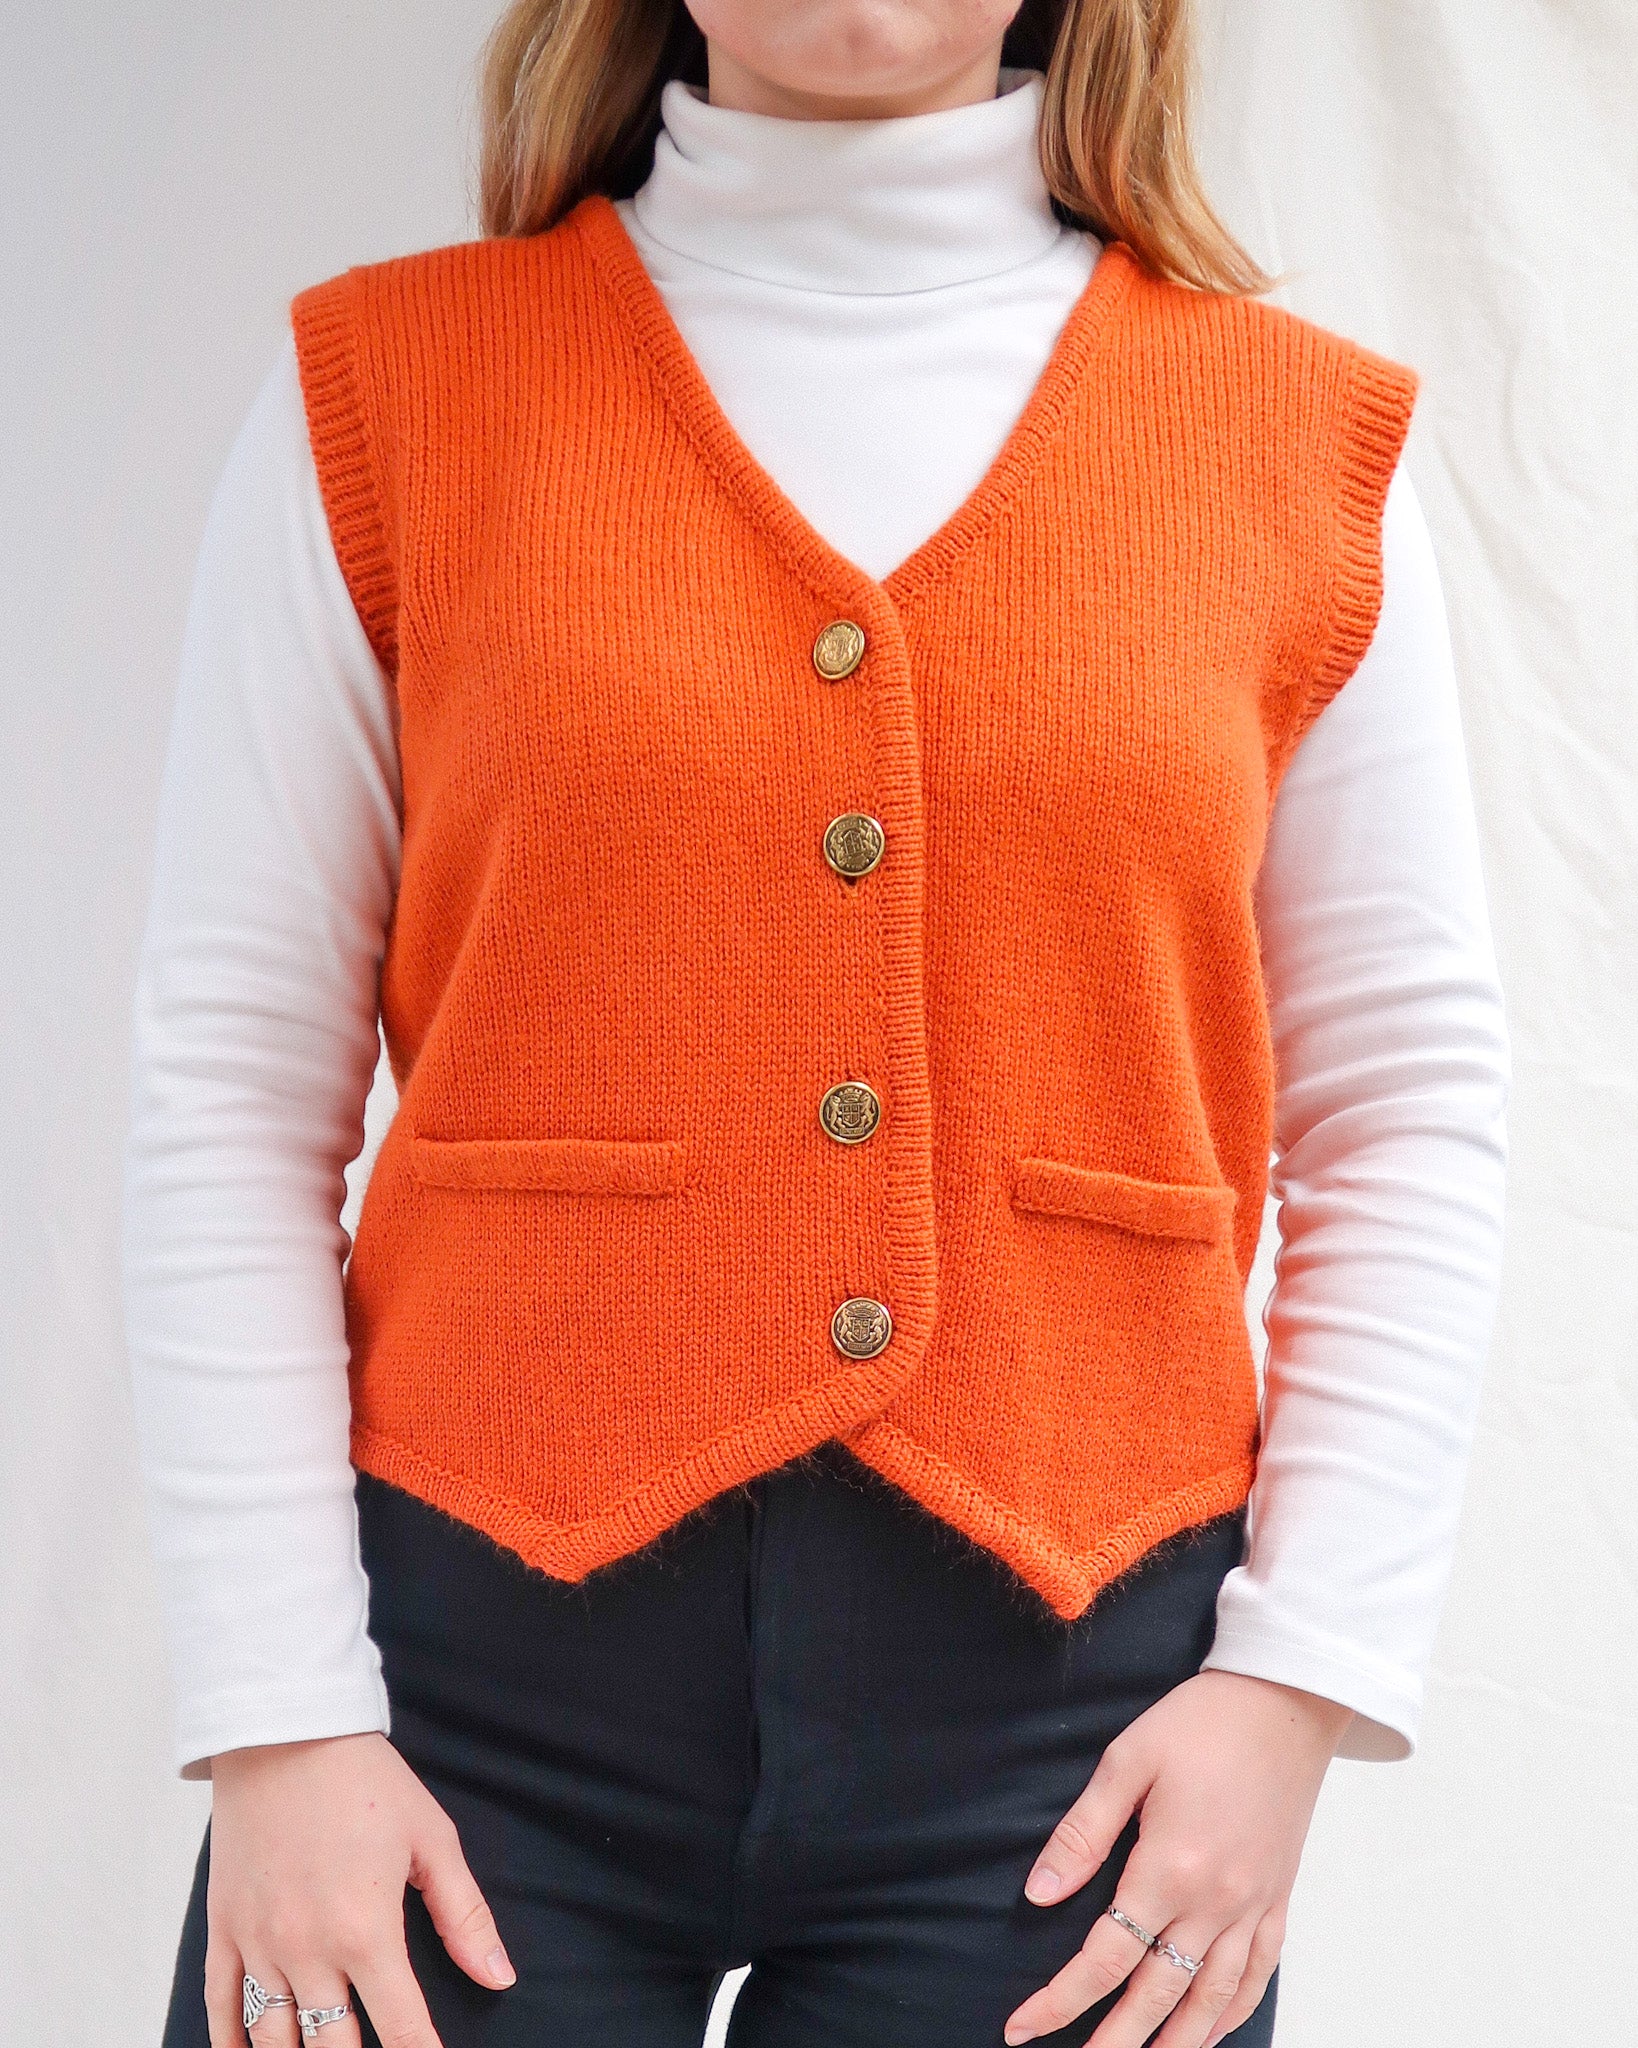 Orange sweater vest